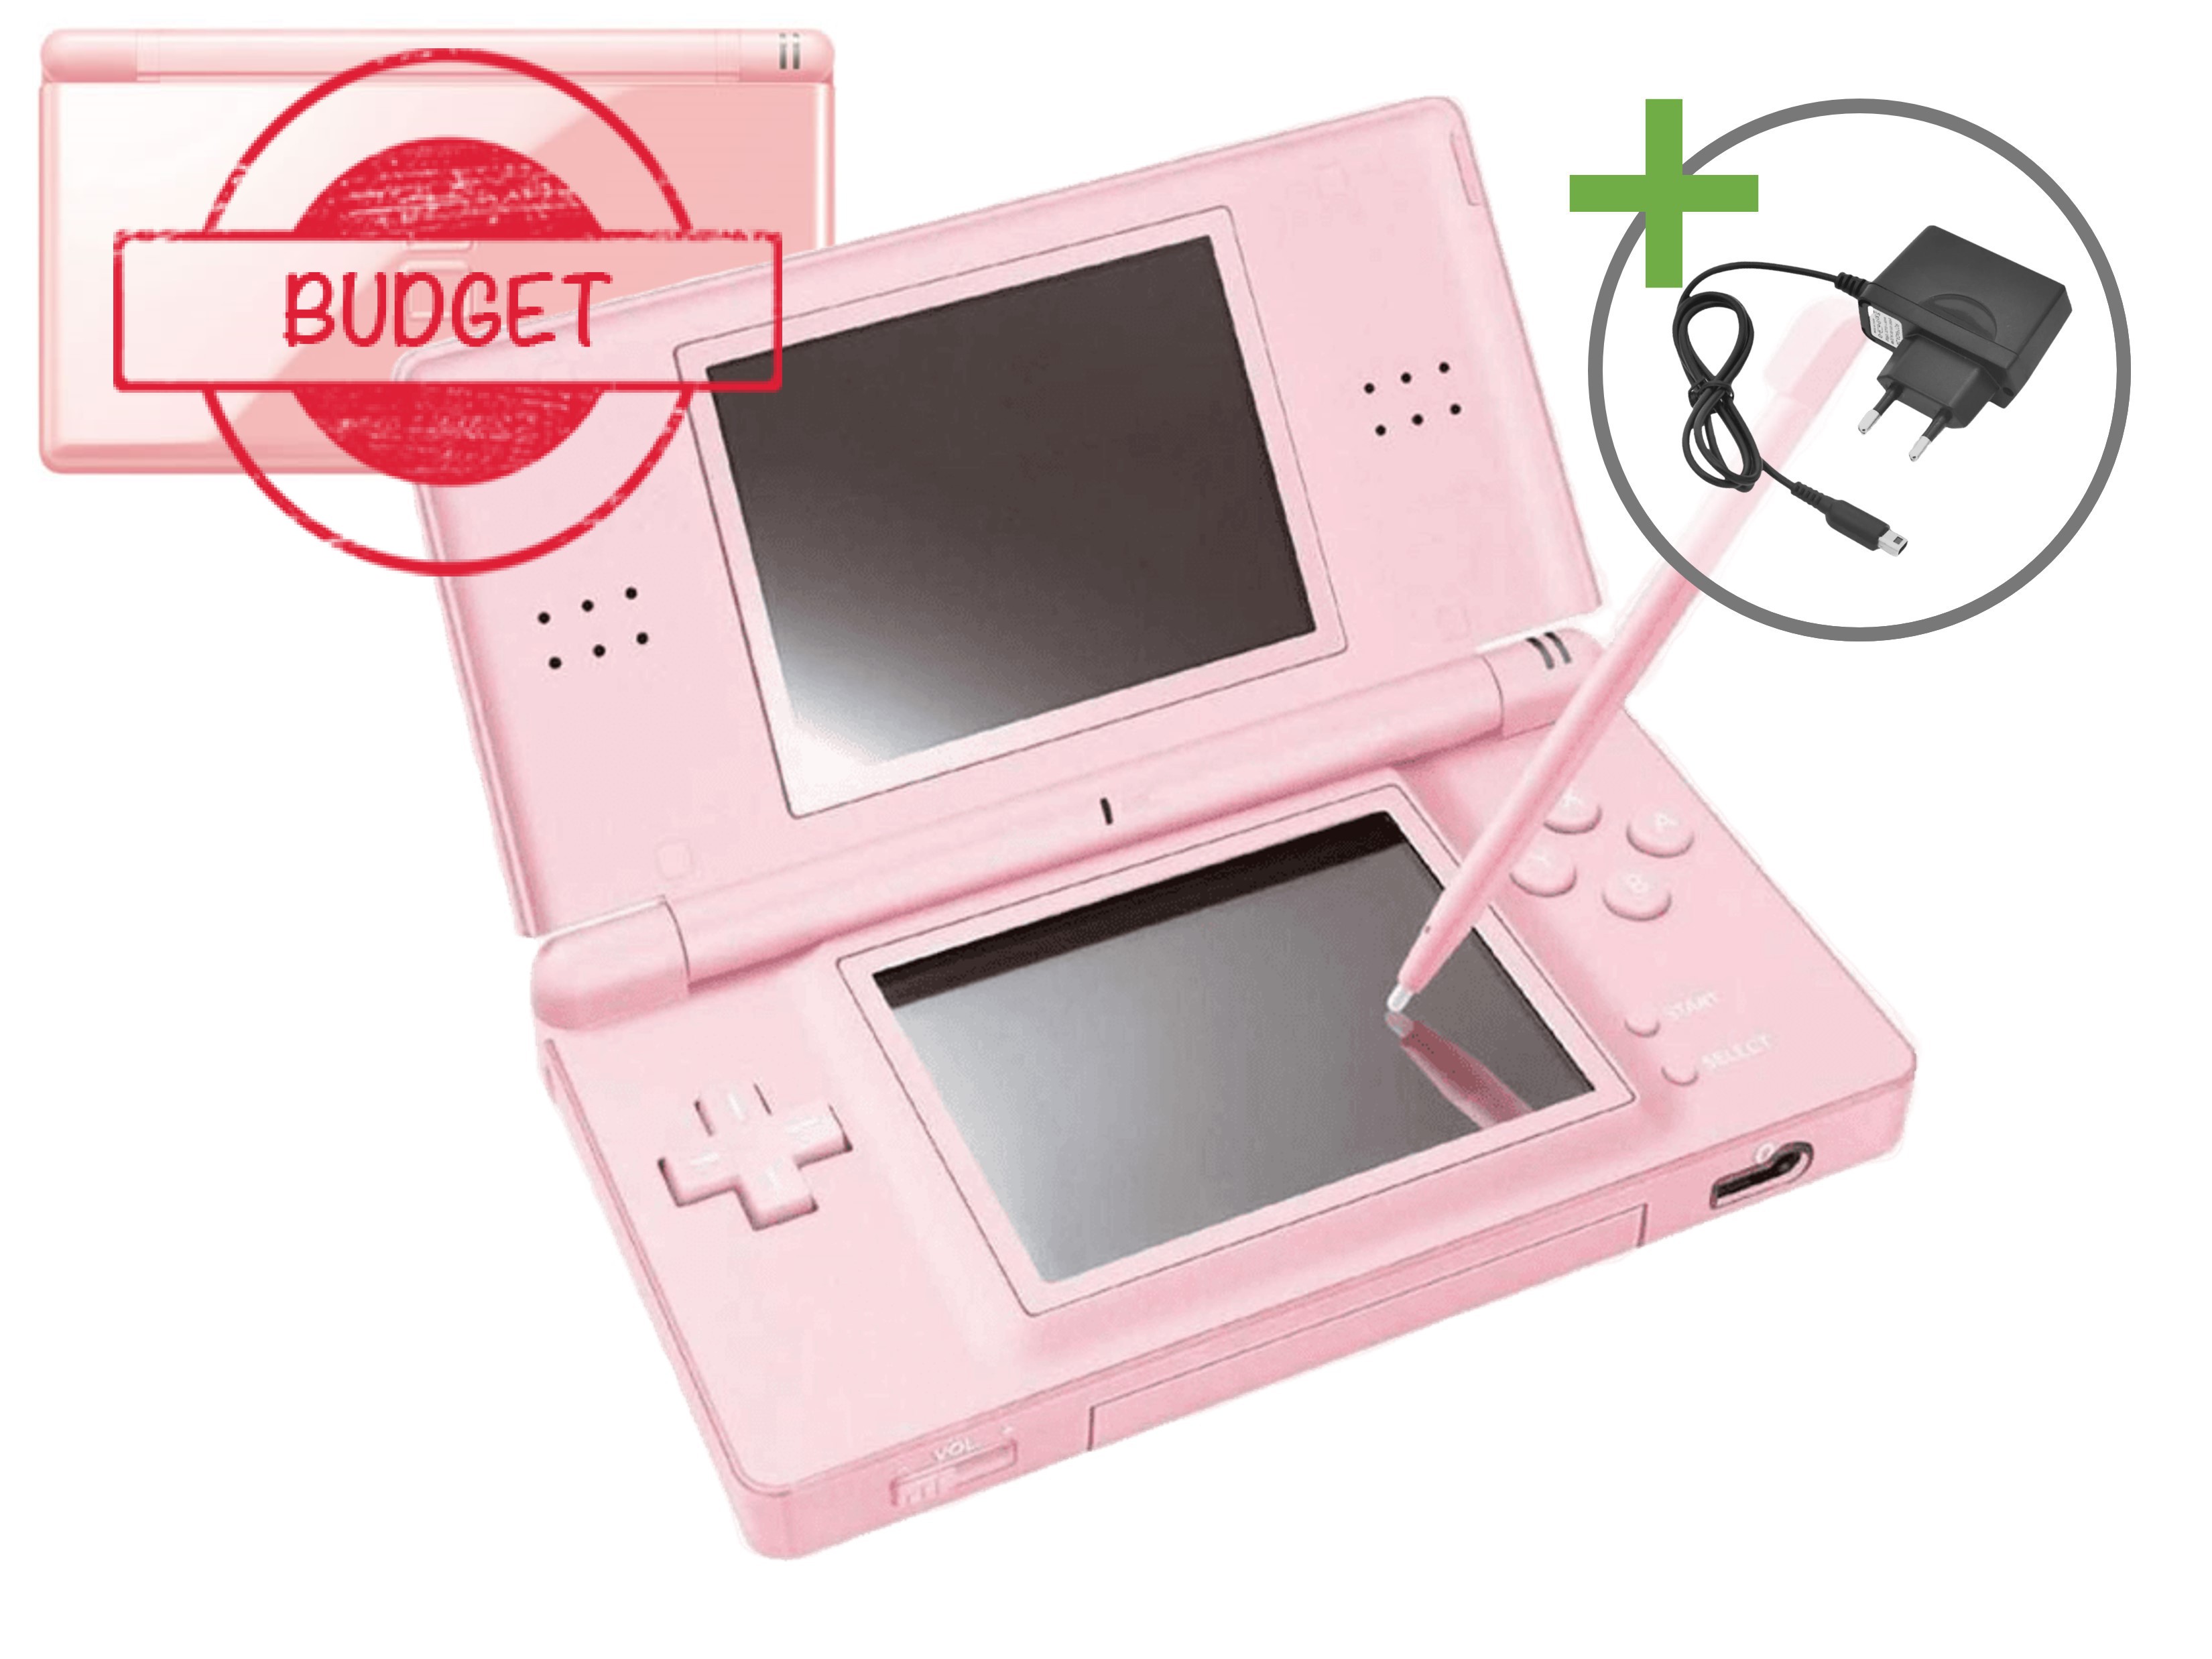 Nintendo DS Lite Pink - Budget - Nintendo DS Hardware